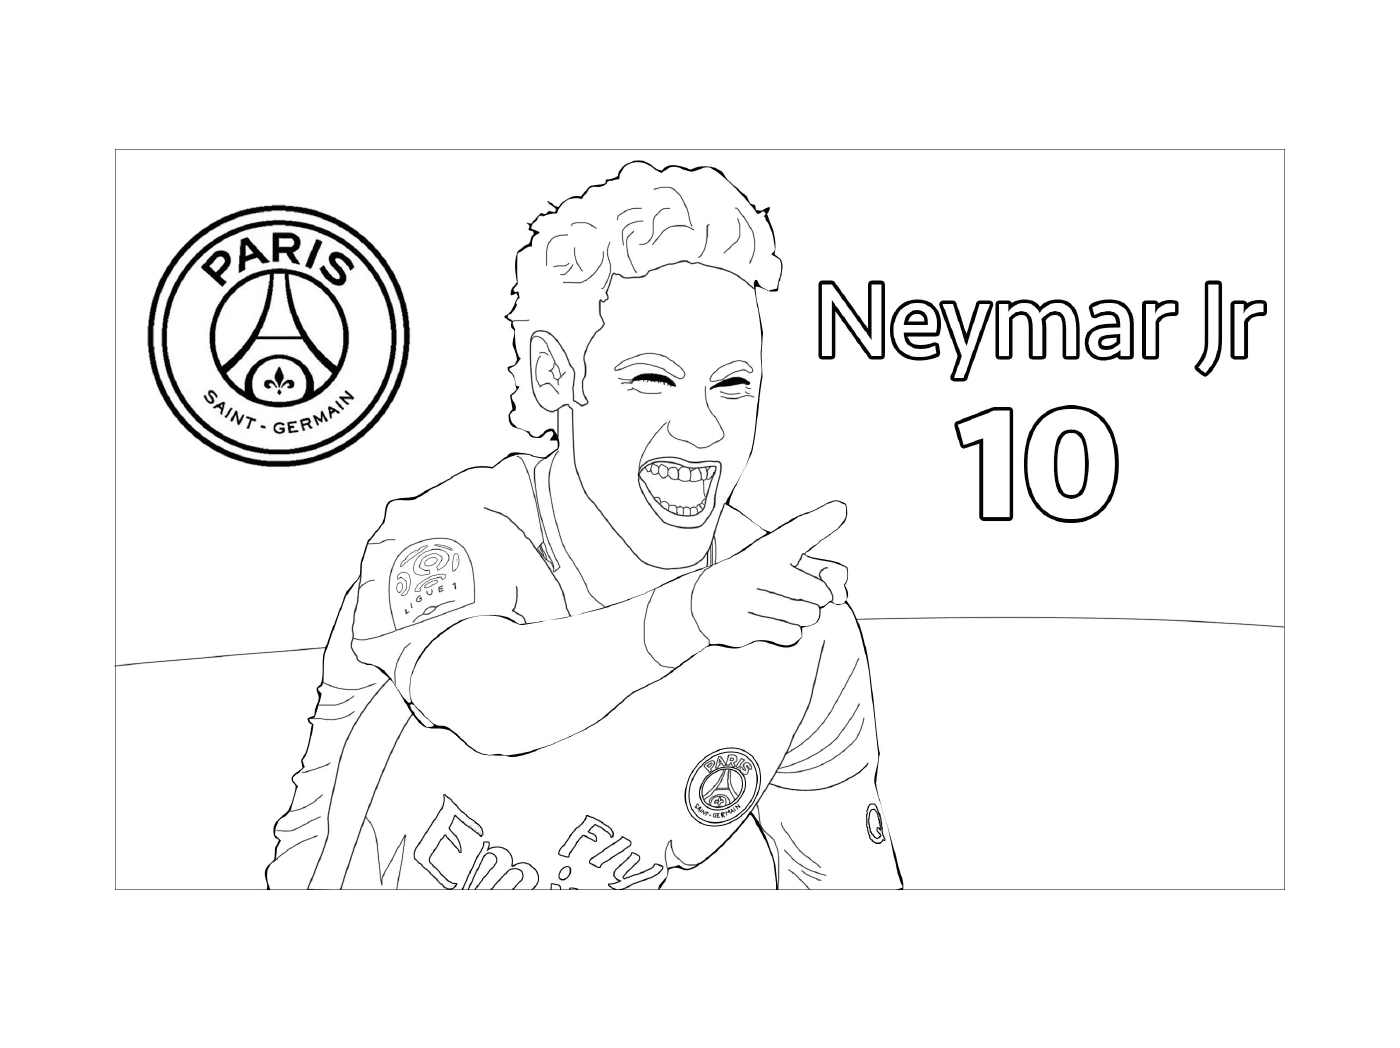  Neymar Jr, PSG football player 